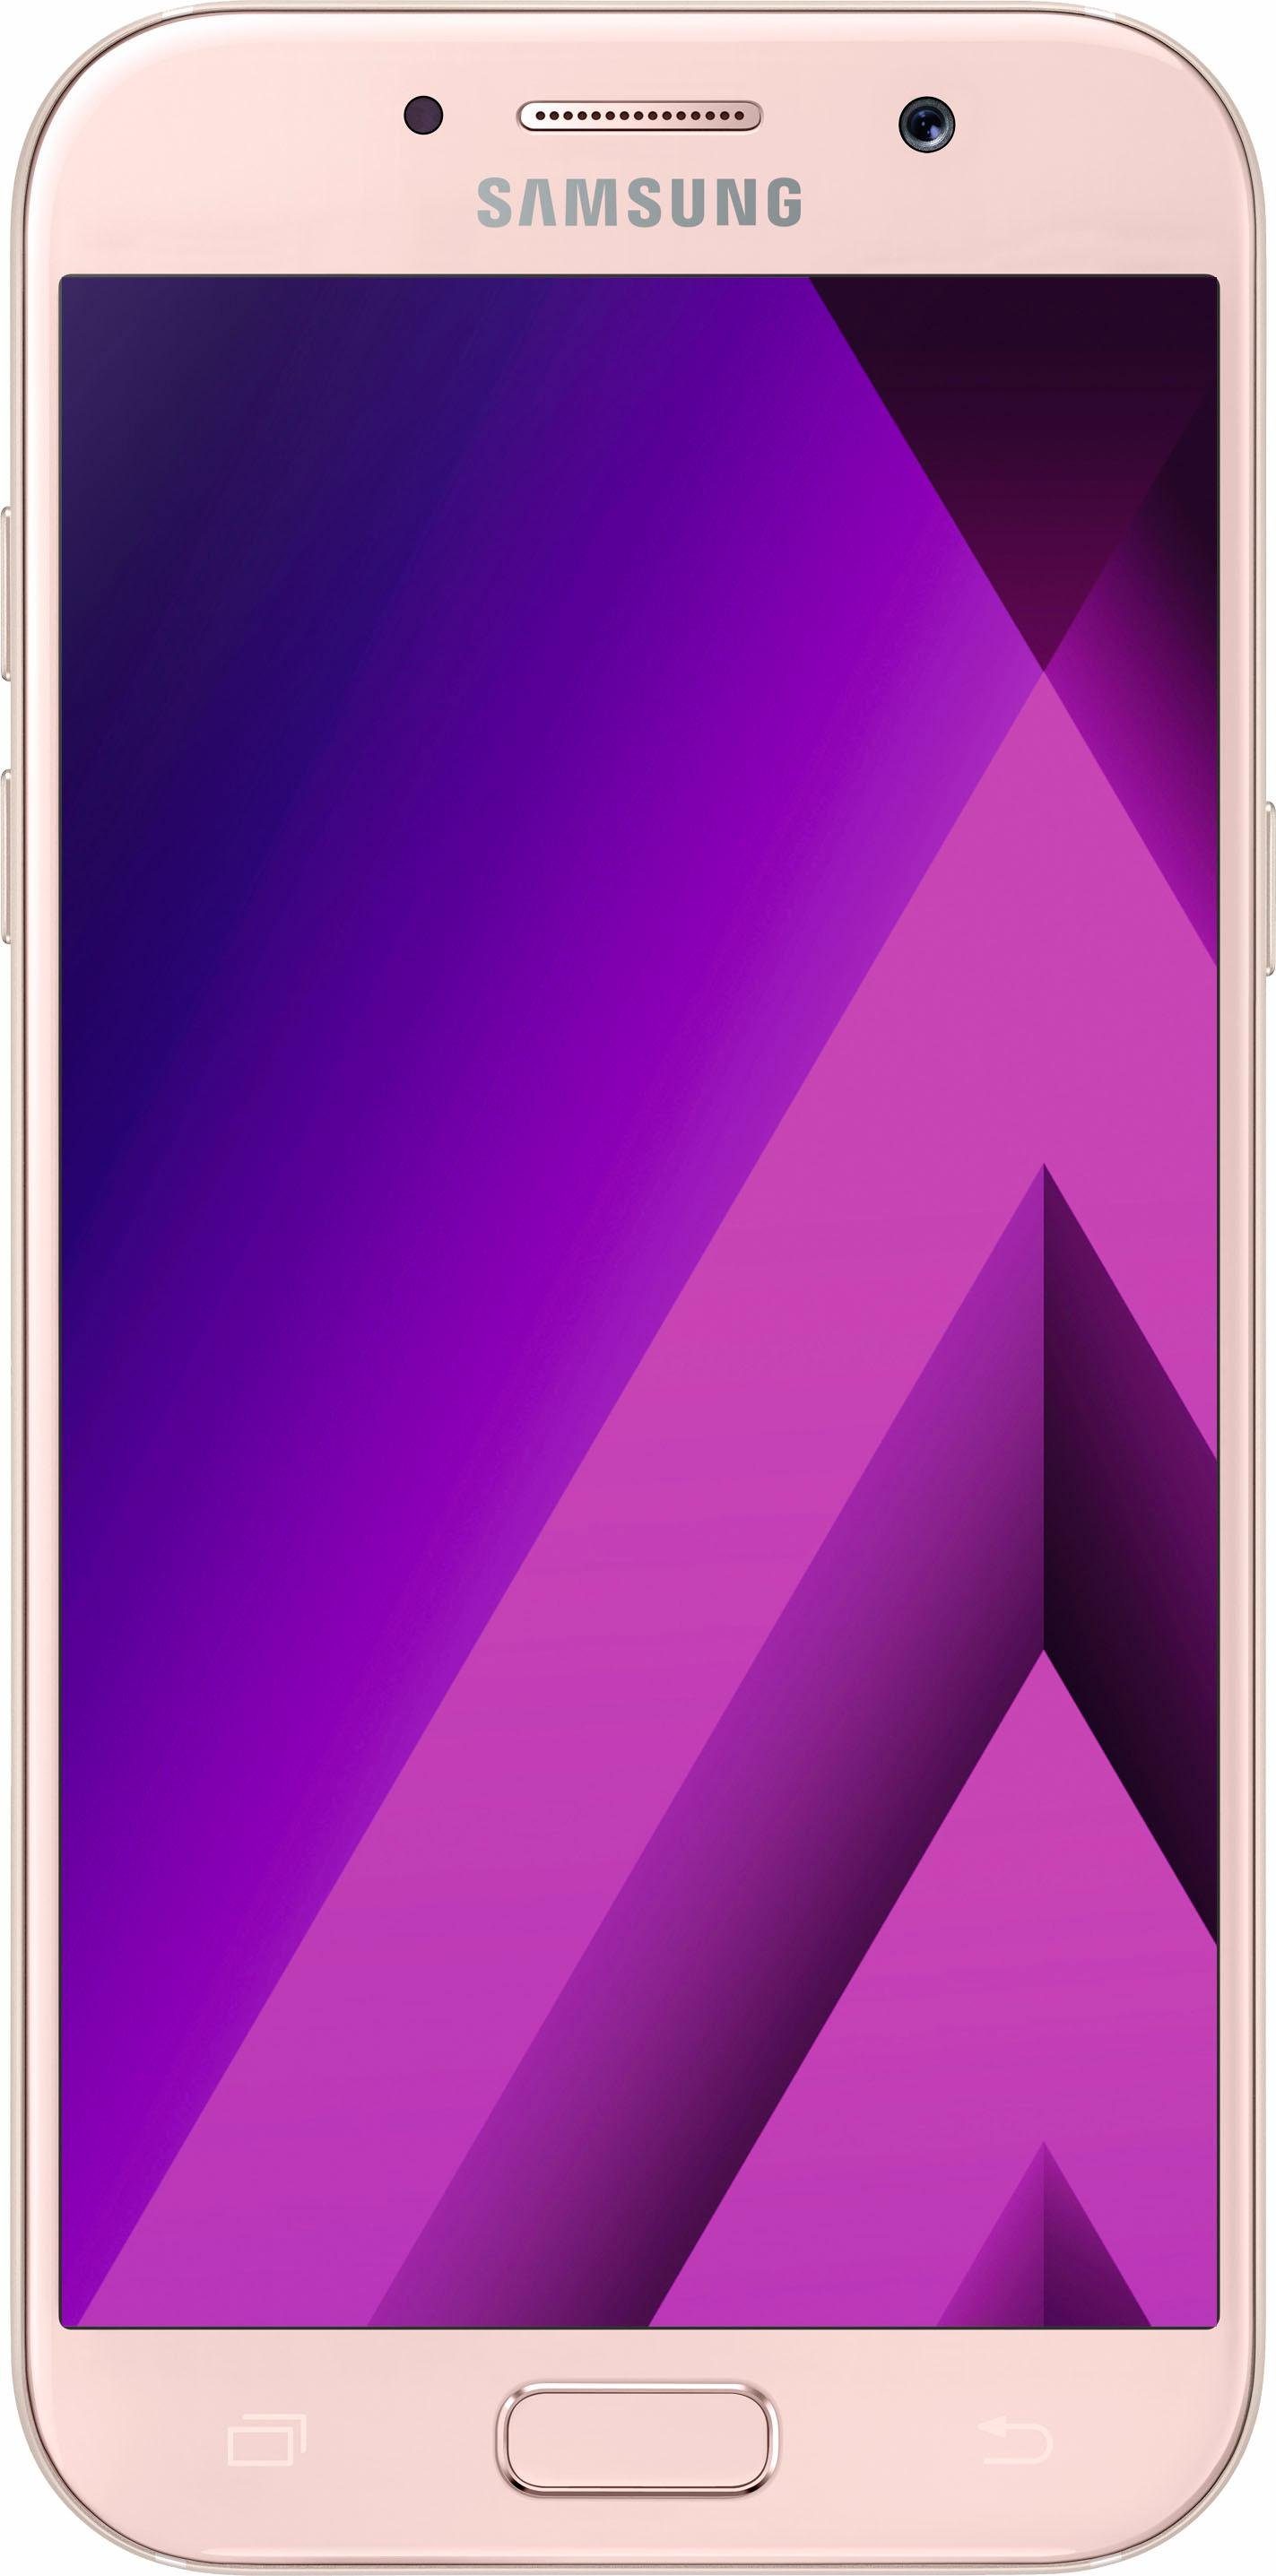 Otto - SAMSUNG SAMSUNG Galaxy A5 (2017) smartphone, 13,22 cm (5,2 inch) display, LTE (4G)